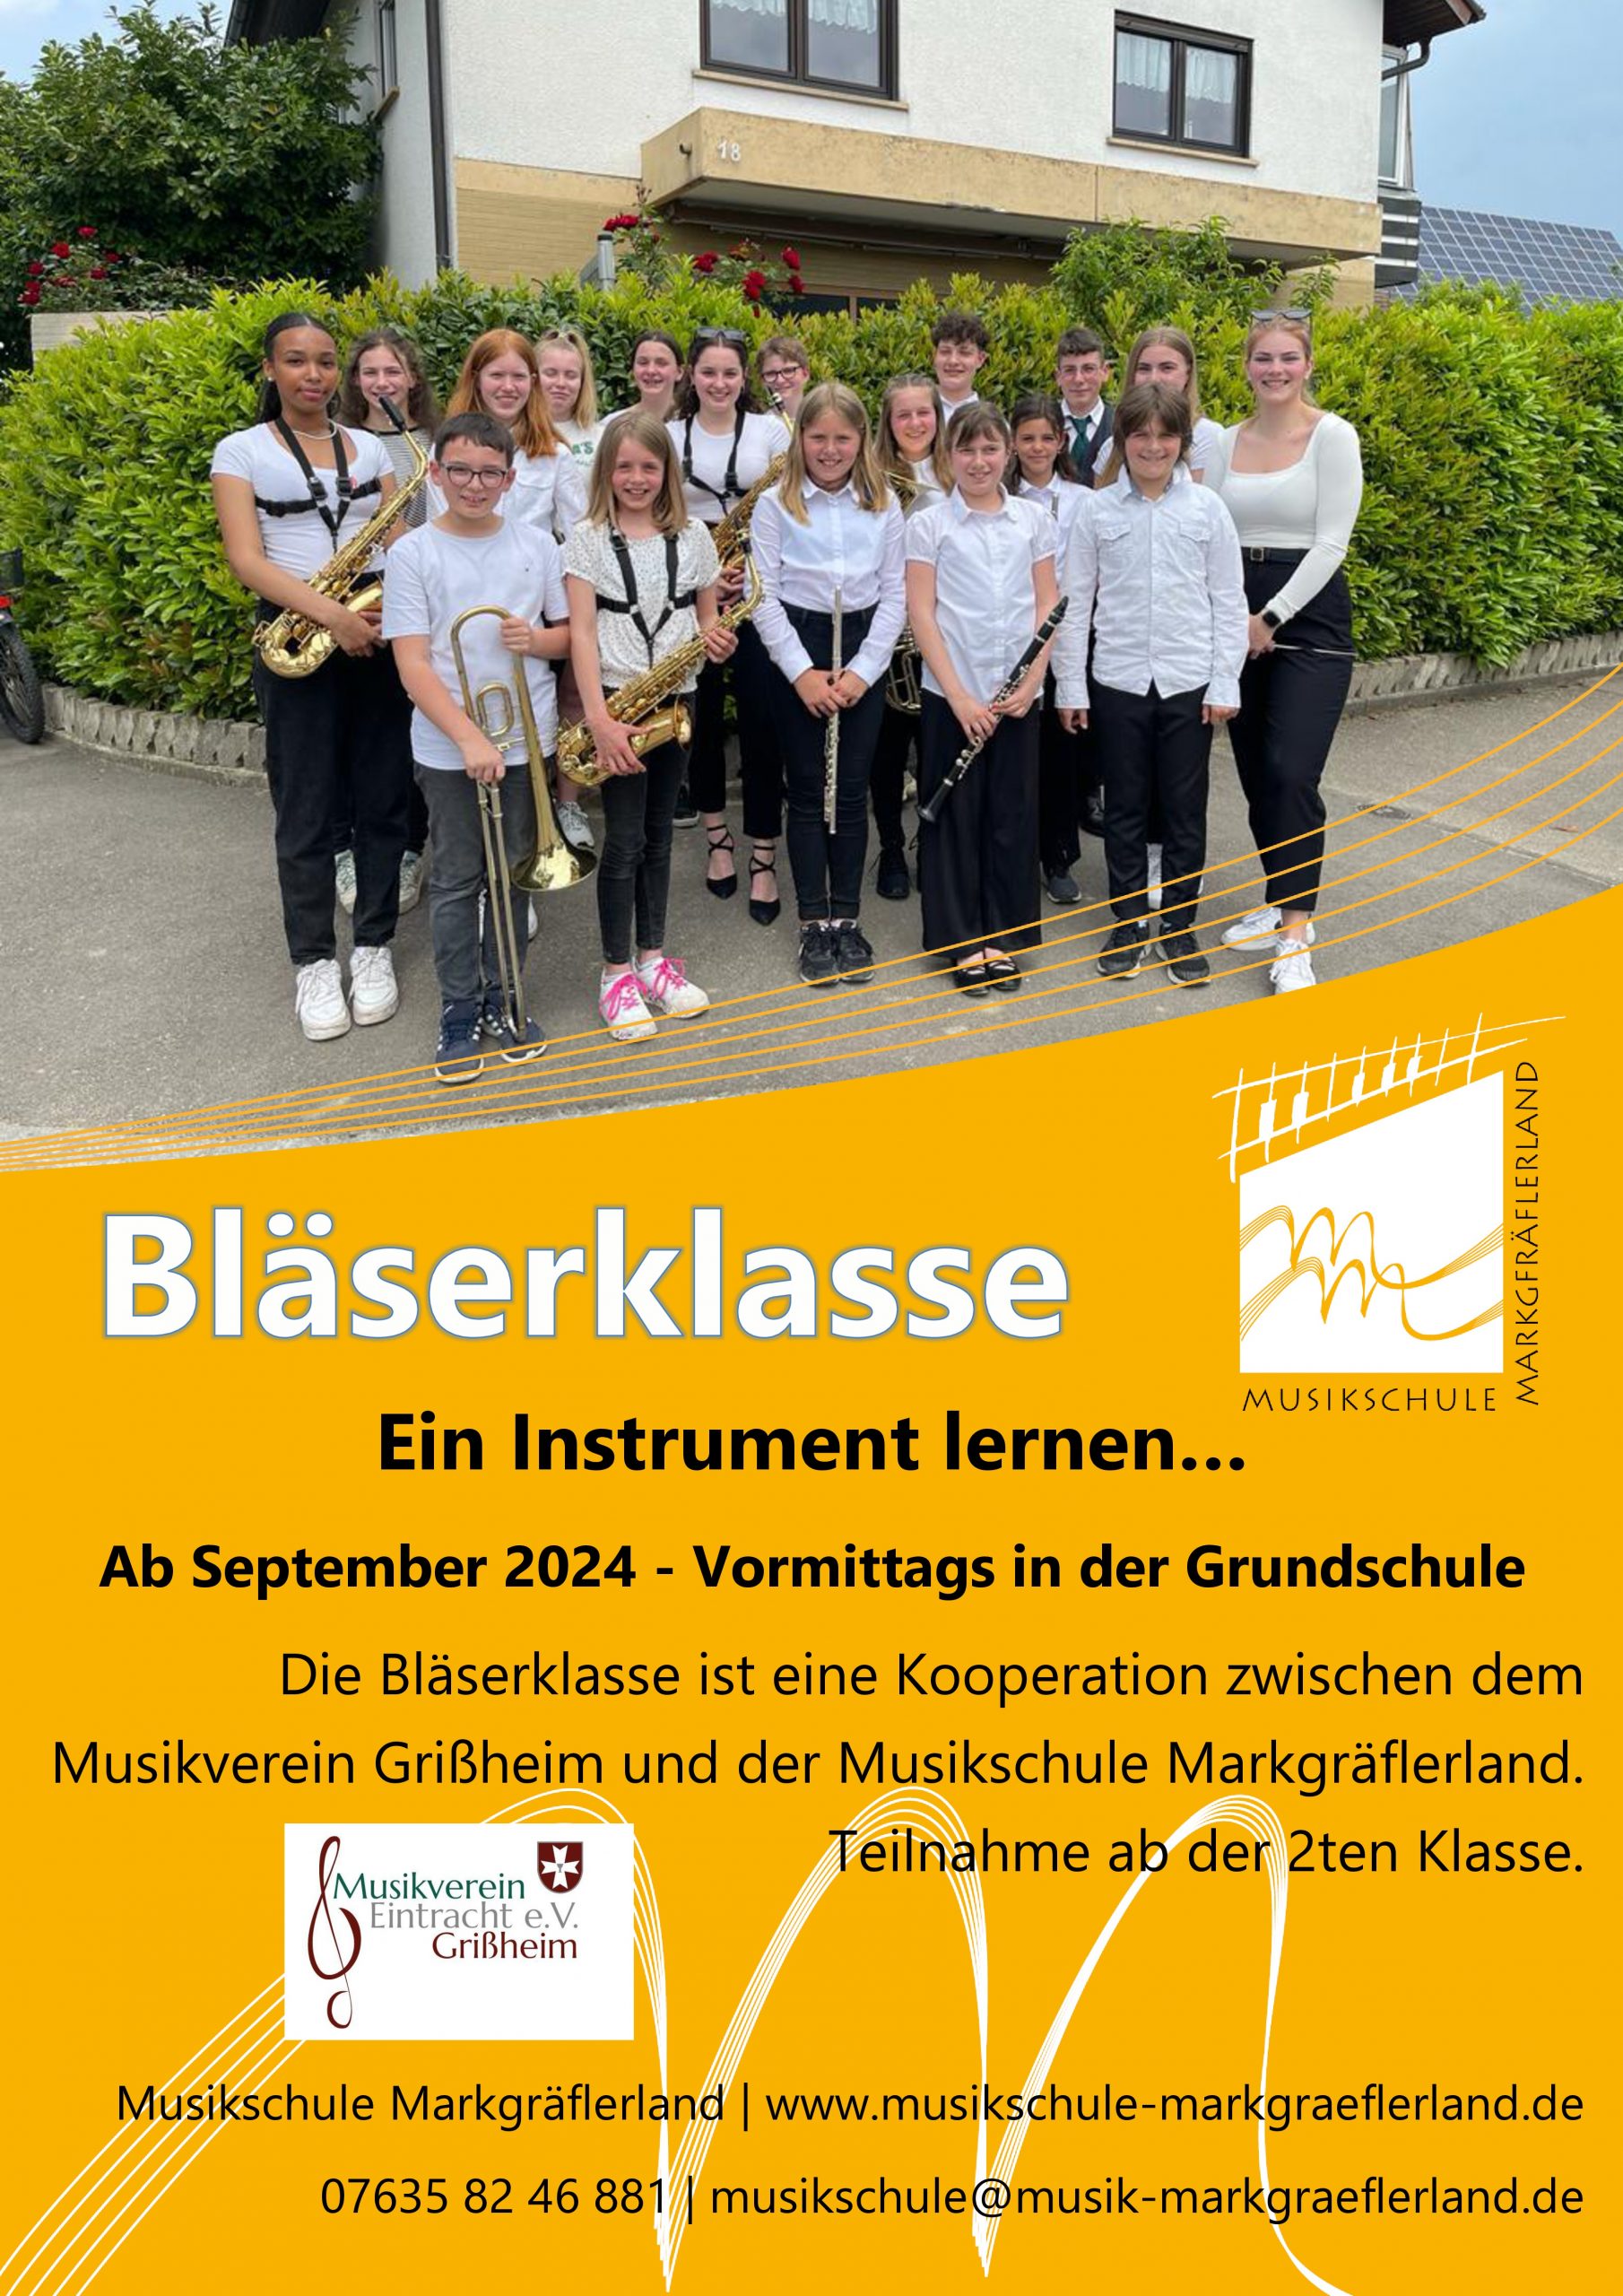 Kooperation bekräftigt – Musikschule in Grißheim